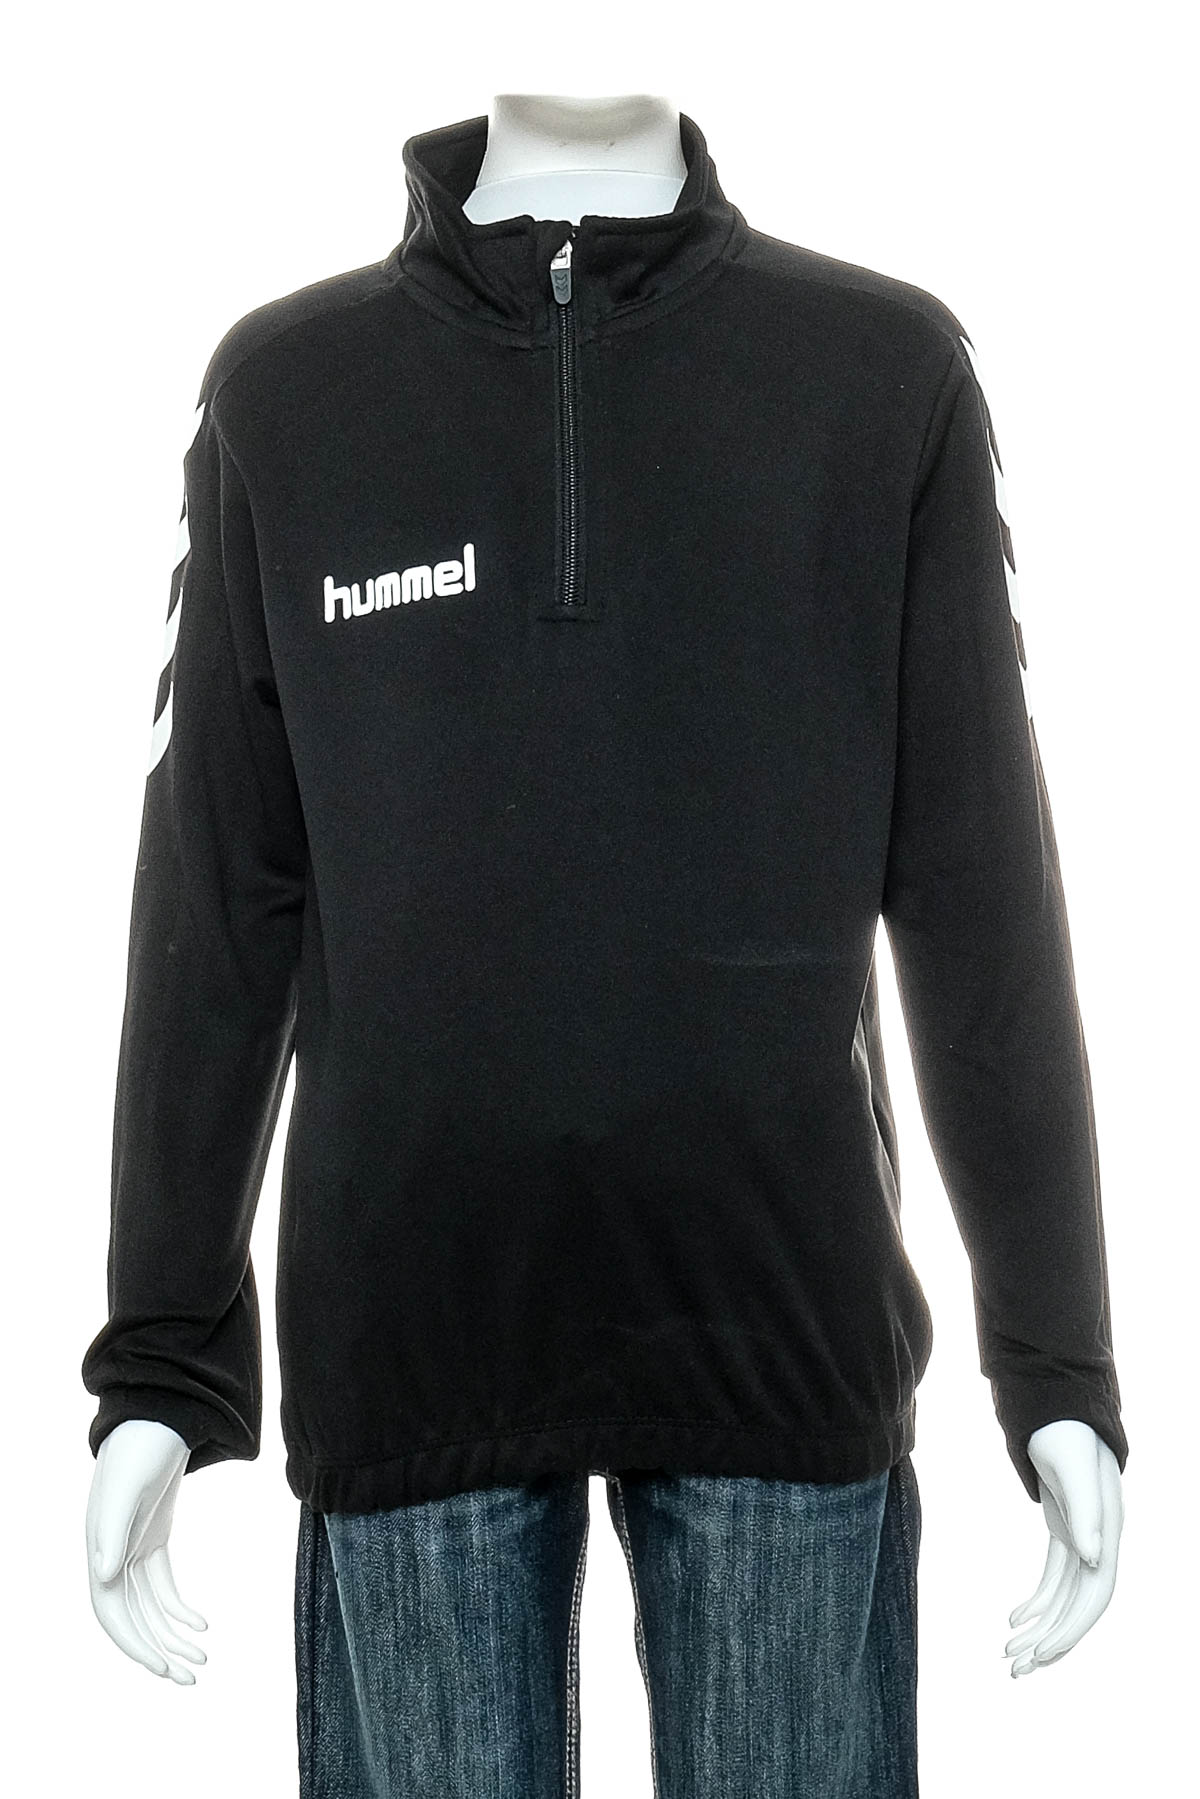 Bluză pentru băiat - Hummel - 0